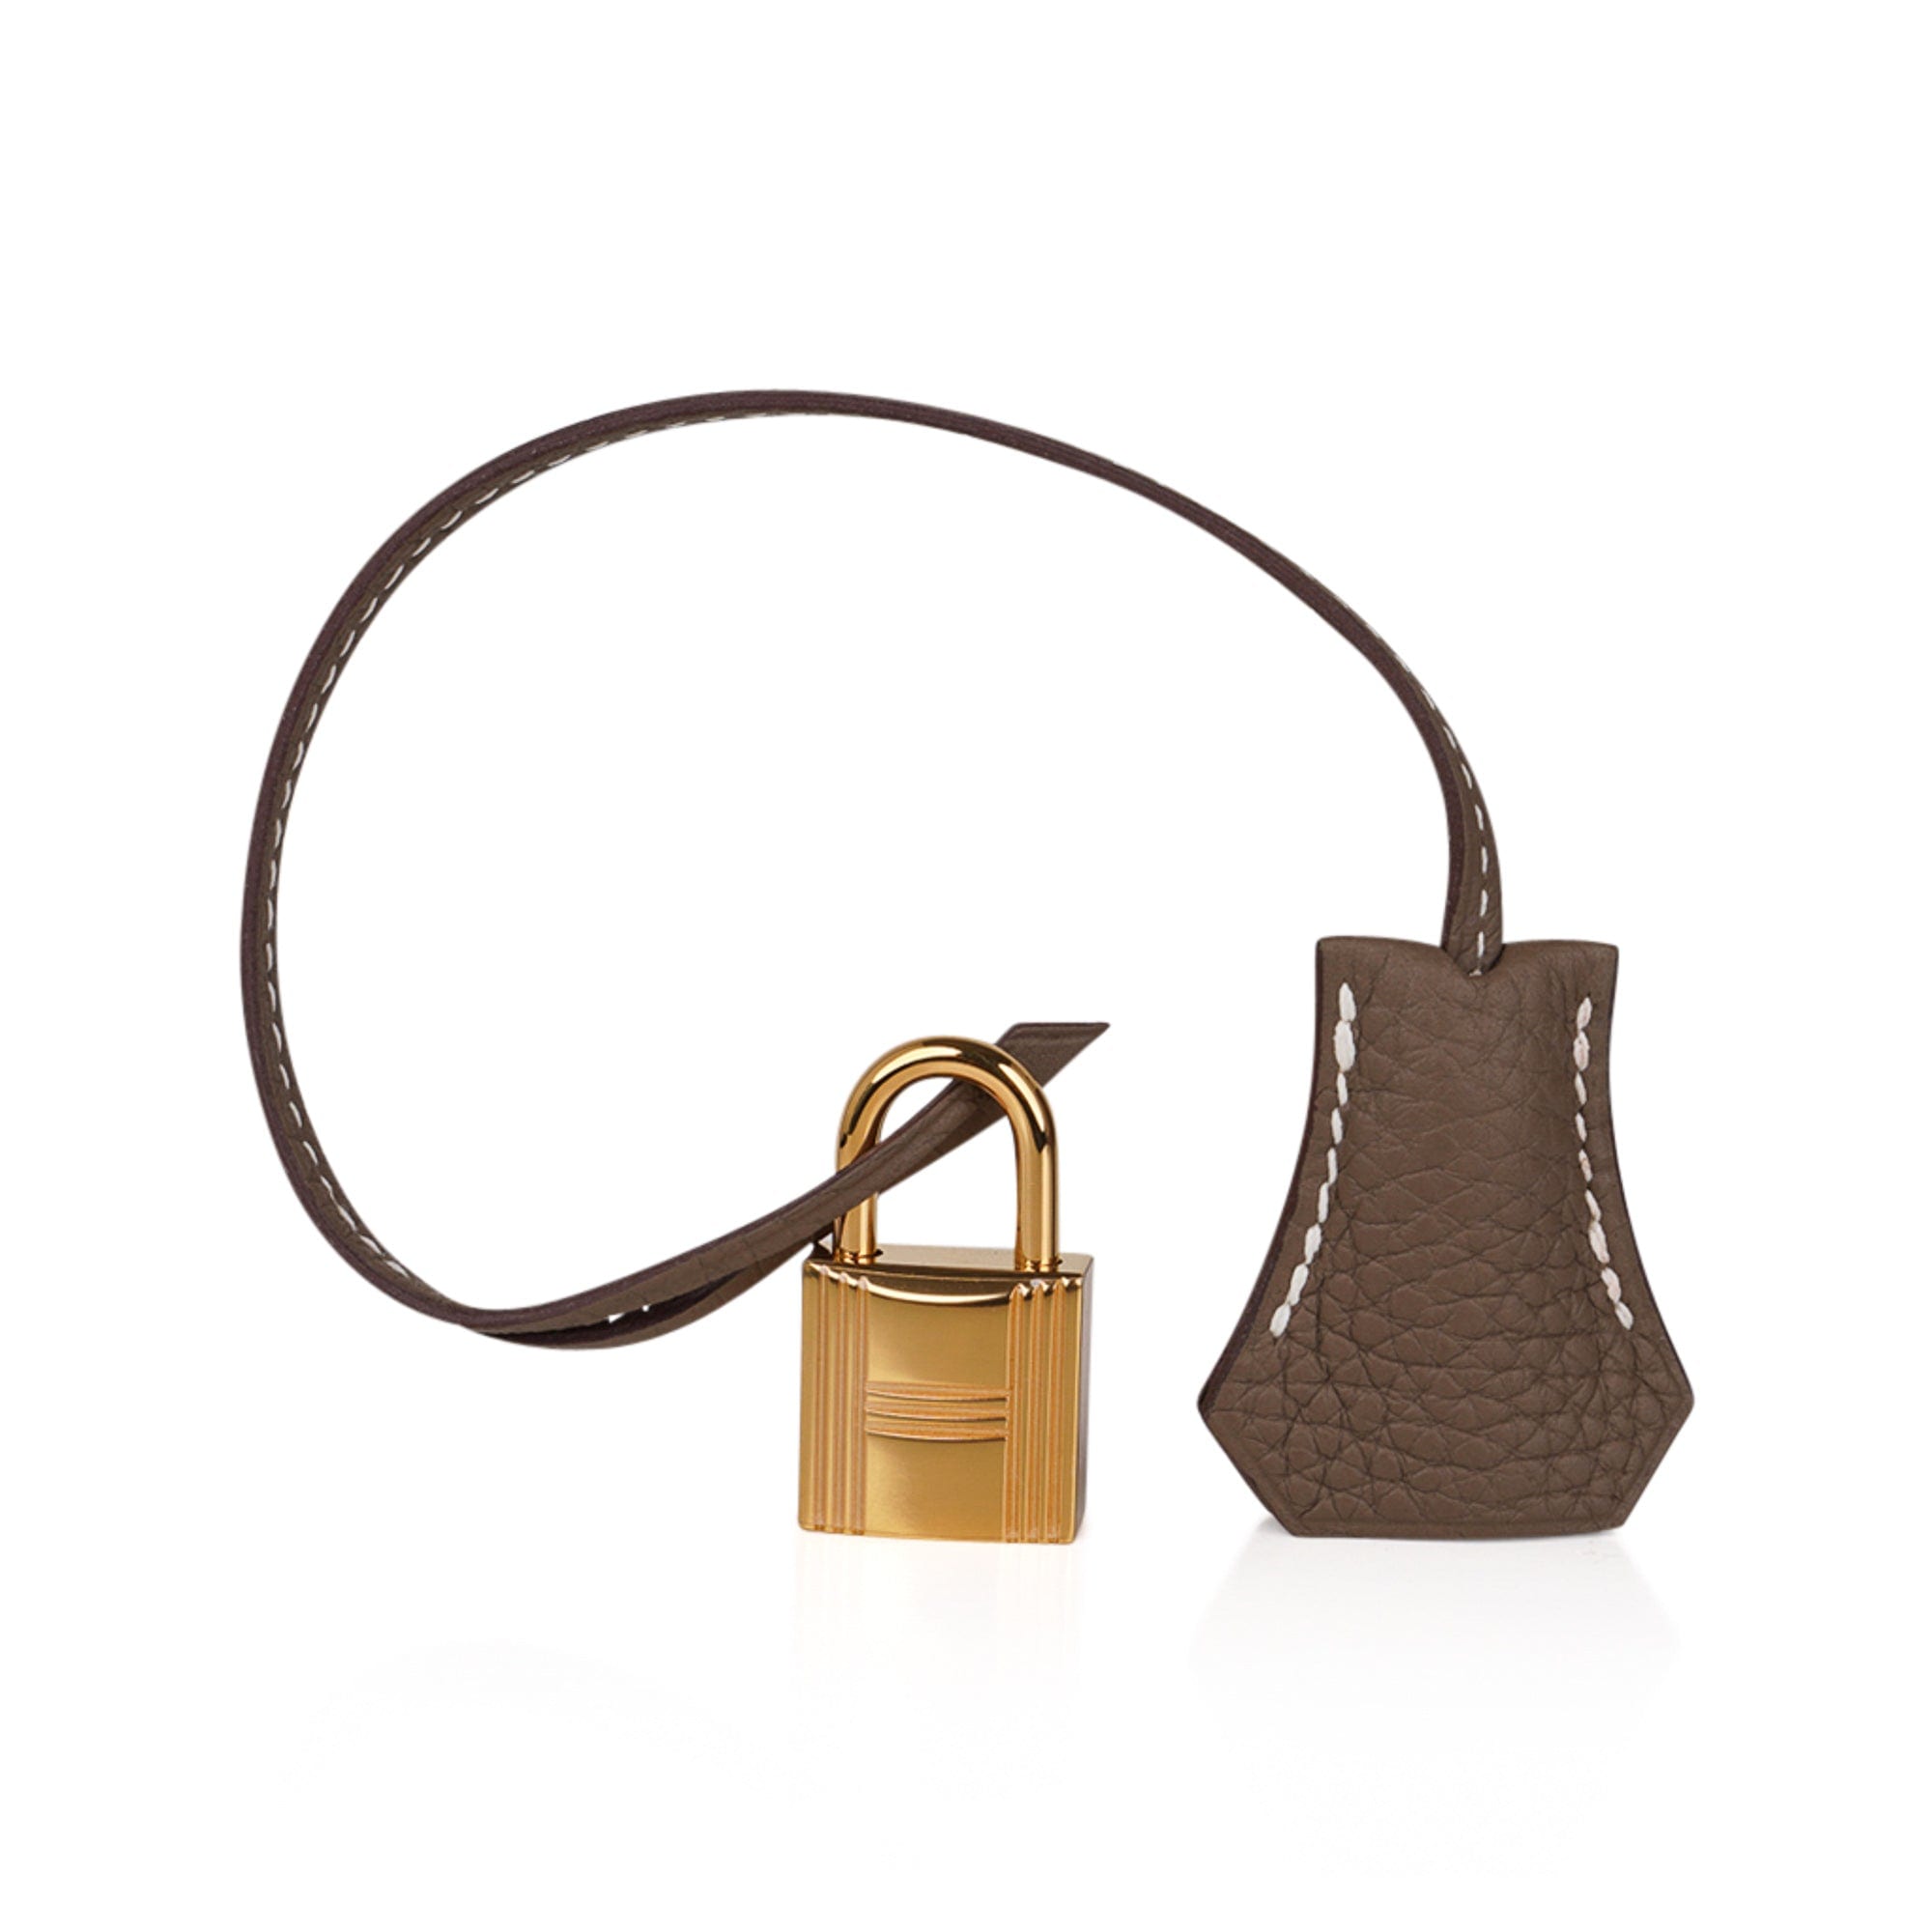 Hermes Birkin 30 Bag Gold Togo Leather Gold Hardware • MIGHTYCHIC • 